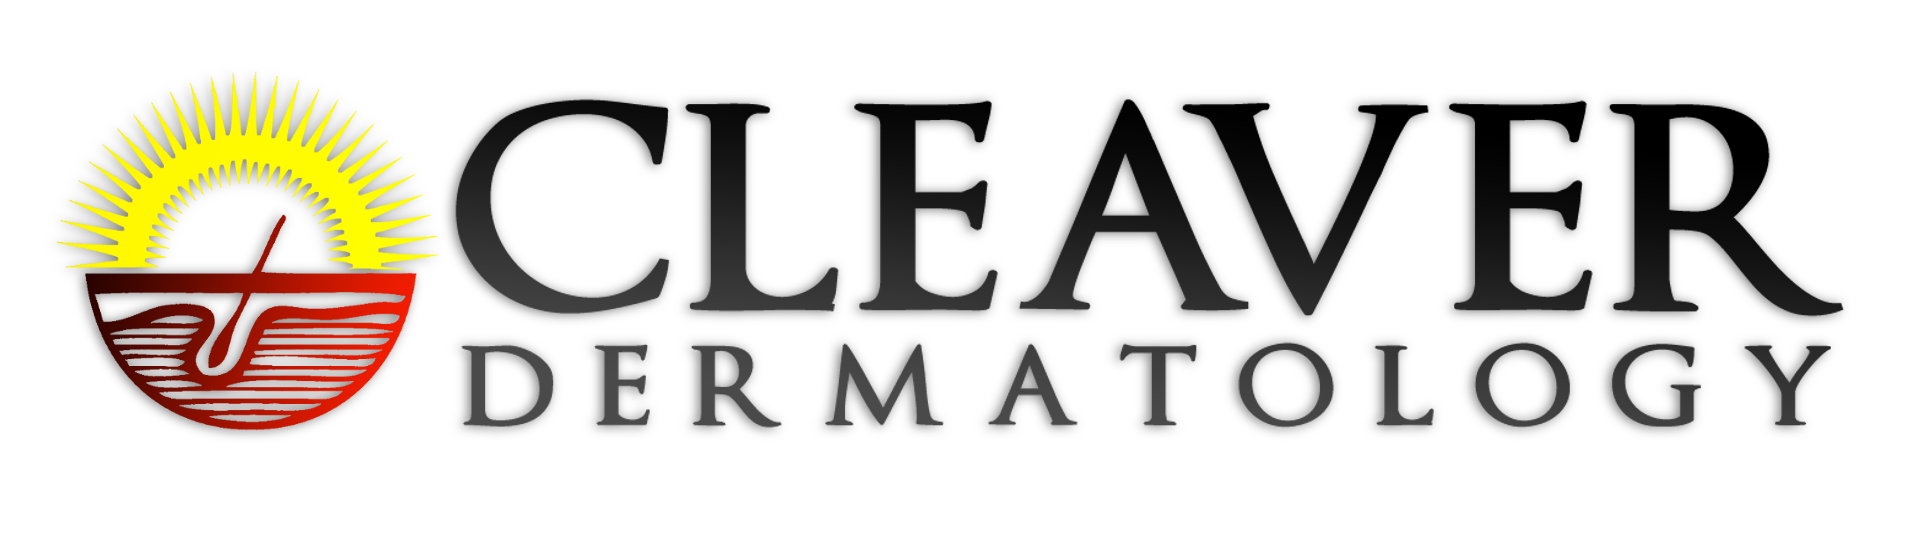 Cleaver Dermatology Logo